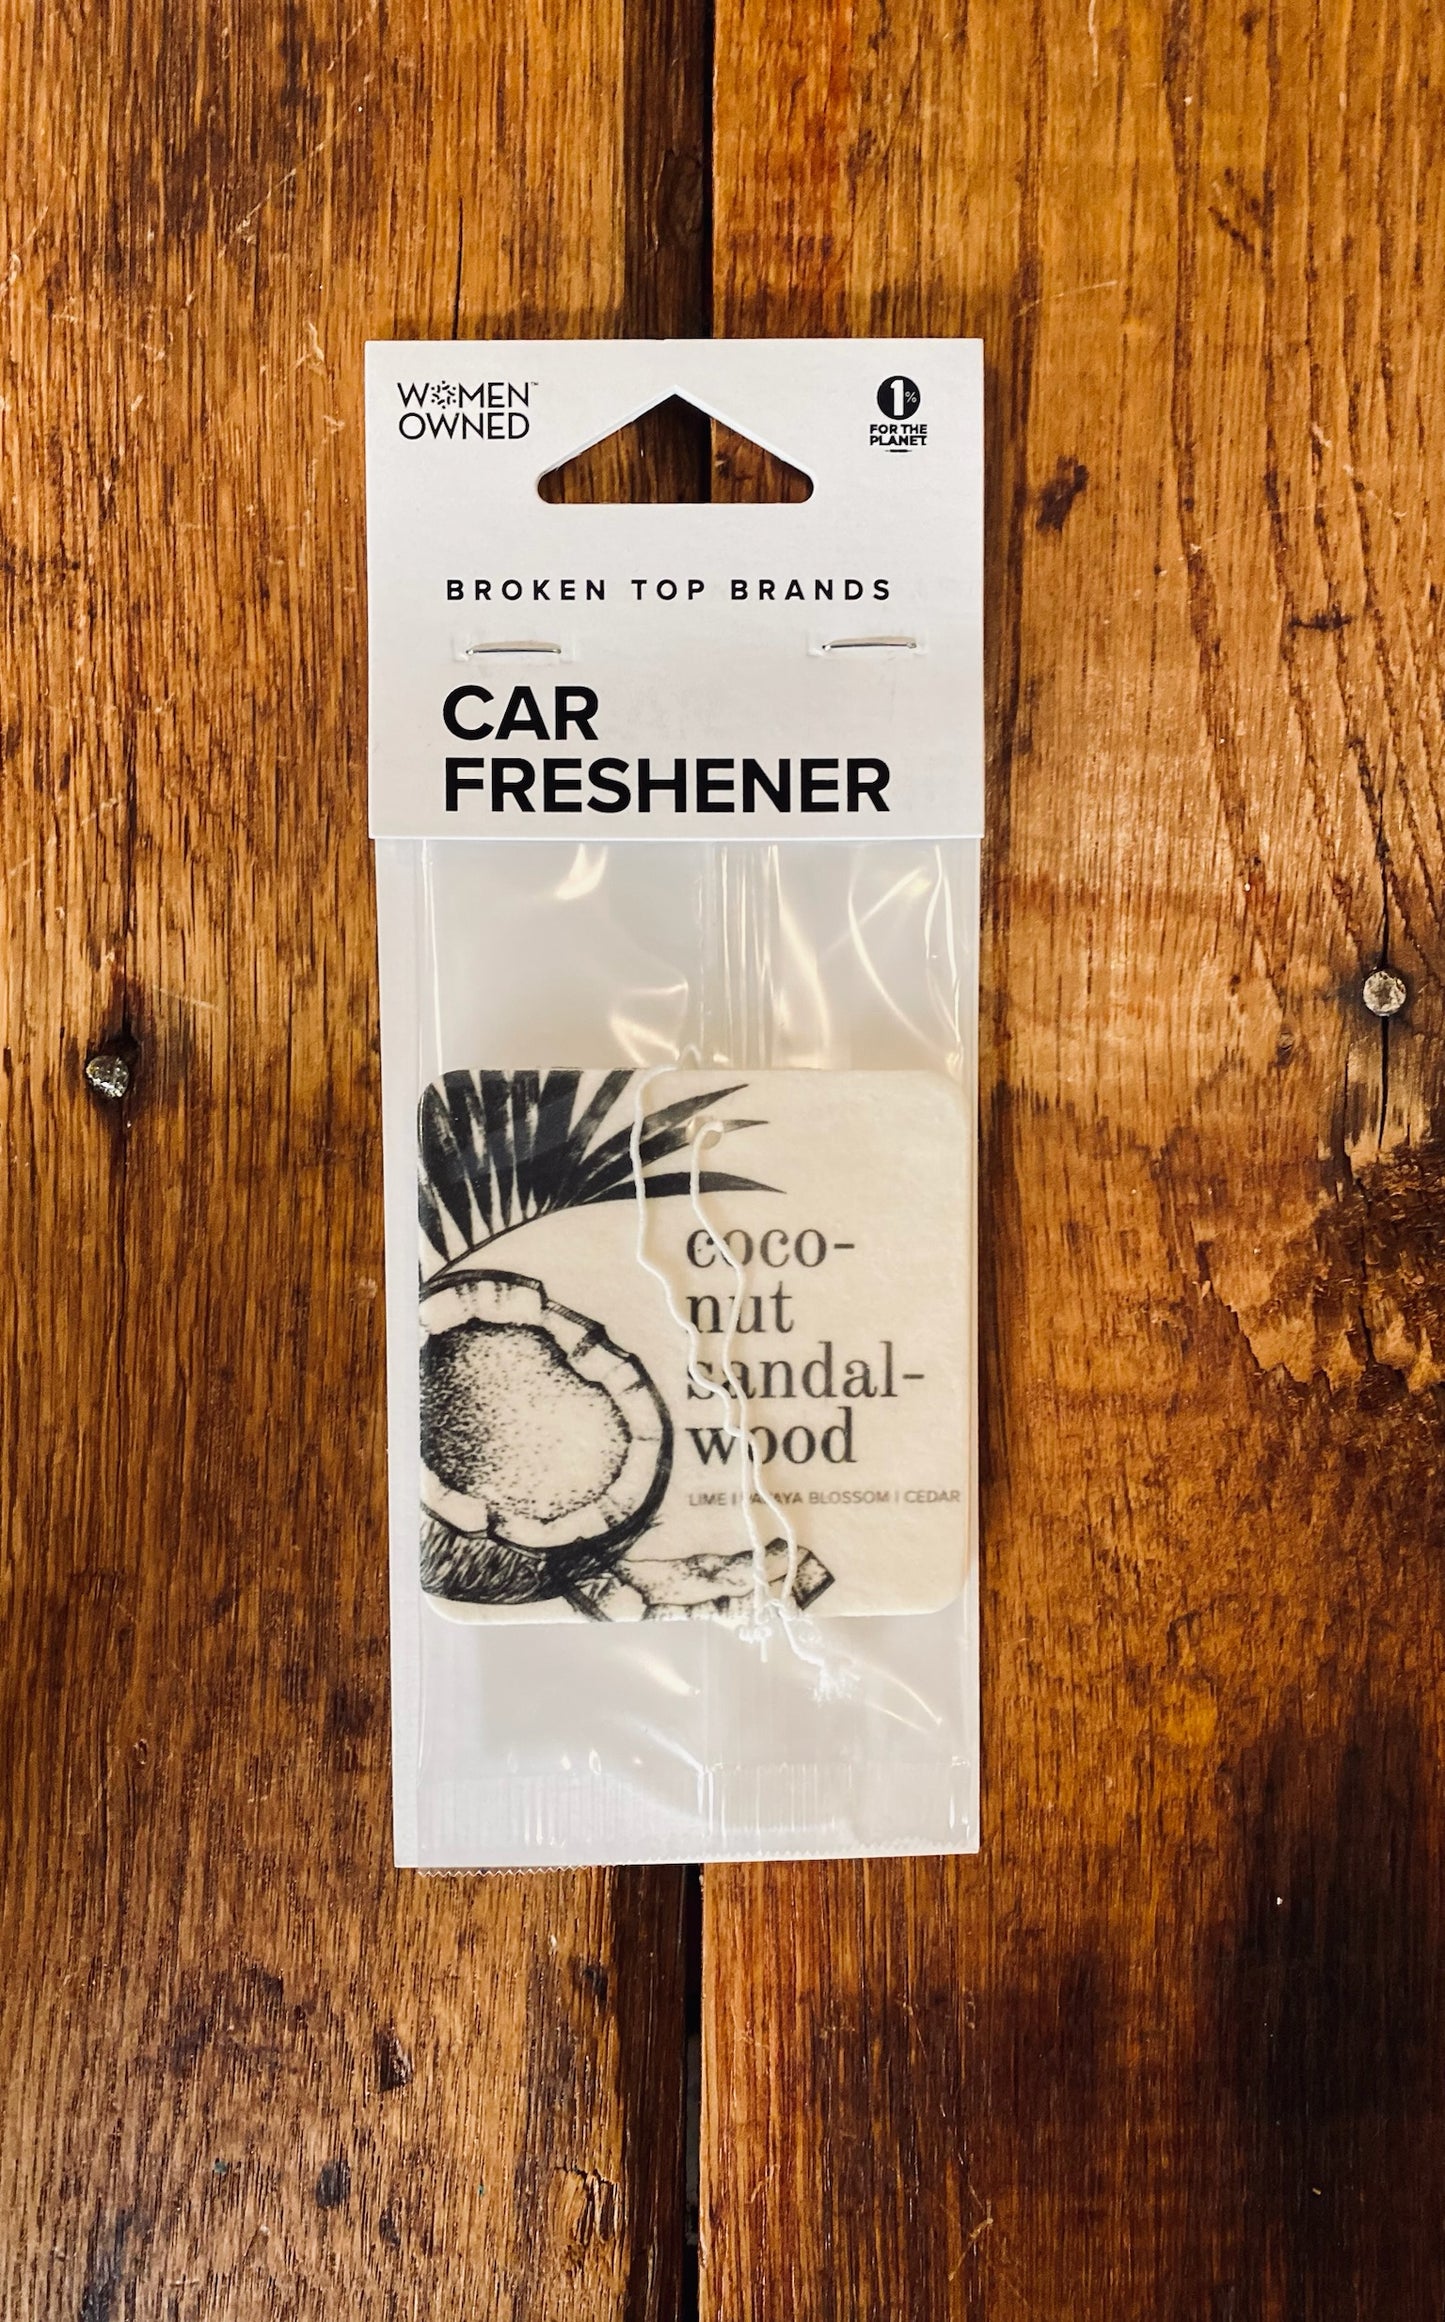 Car Fresheners - Coconut Sandalwood